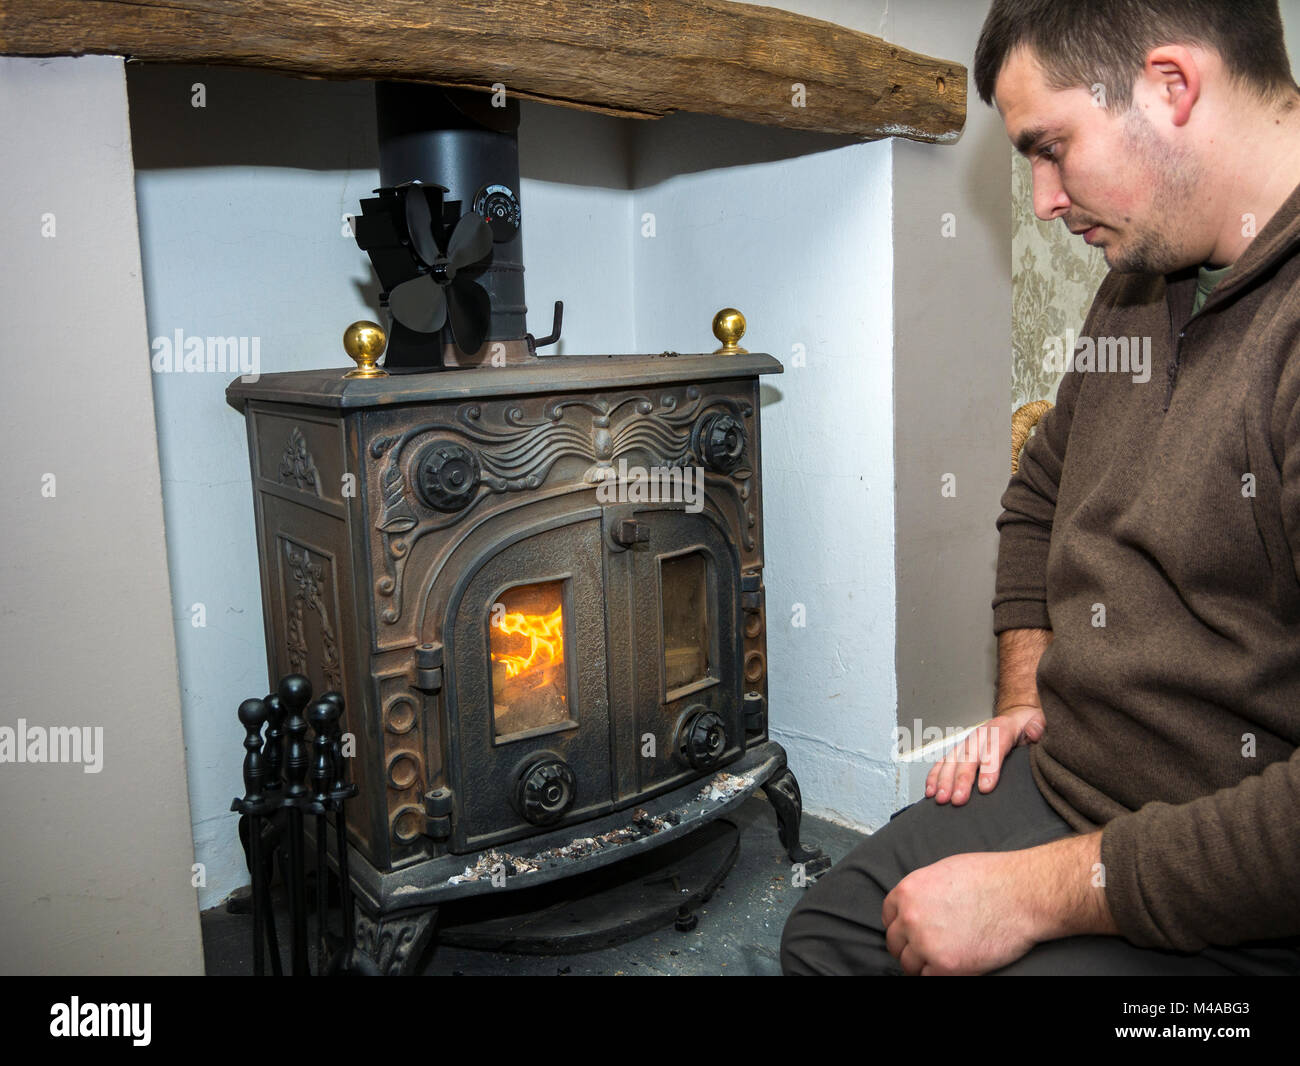 Man lighting traditional wood burning stove Stock Photo